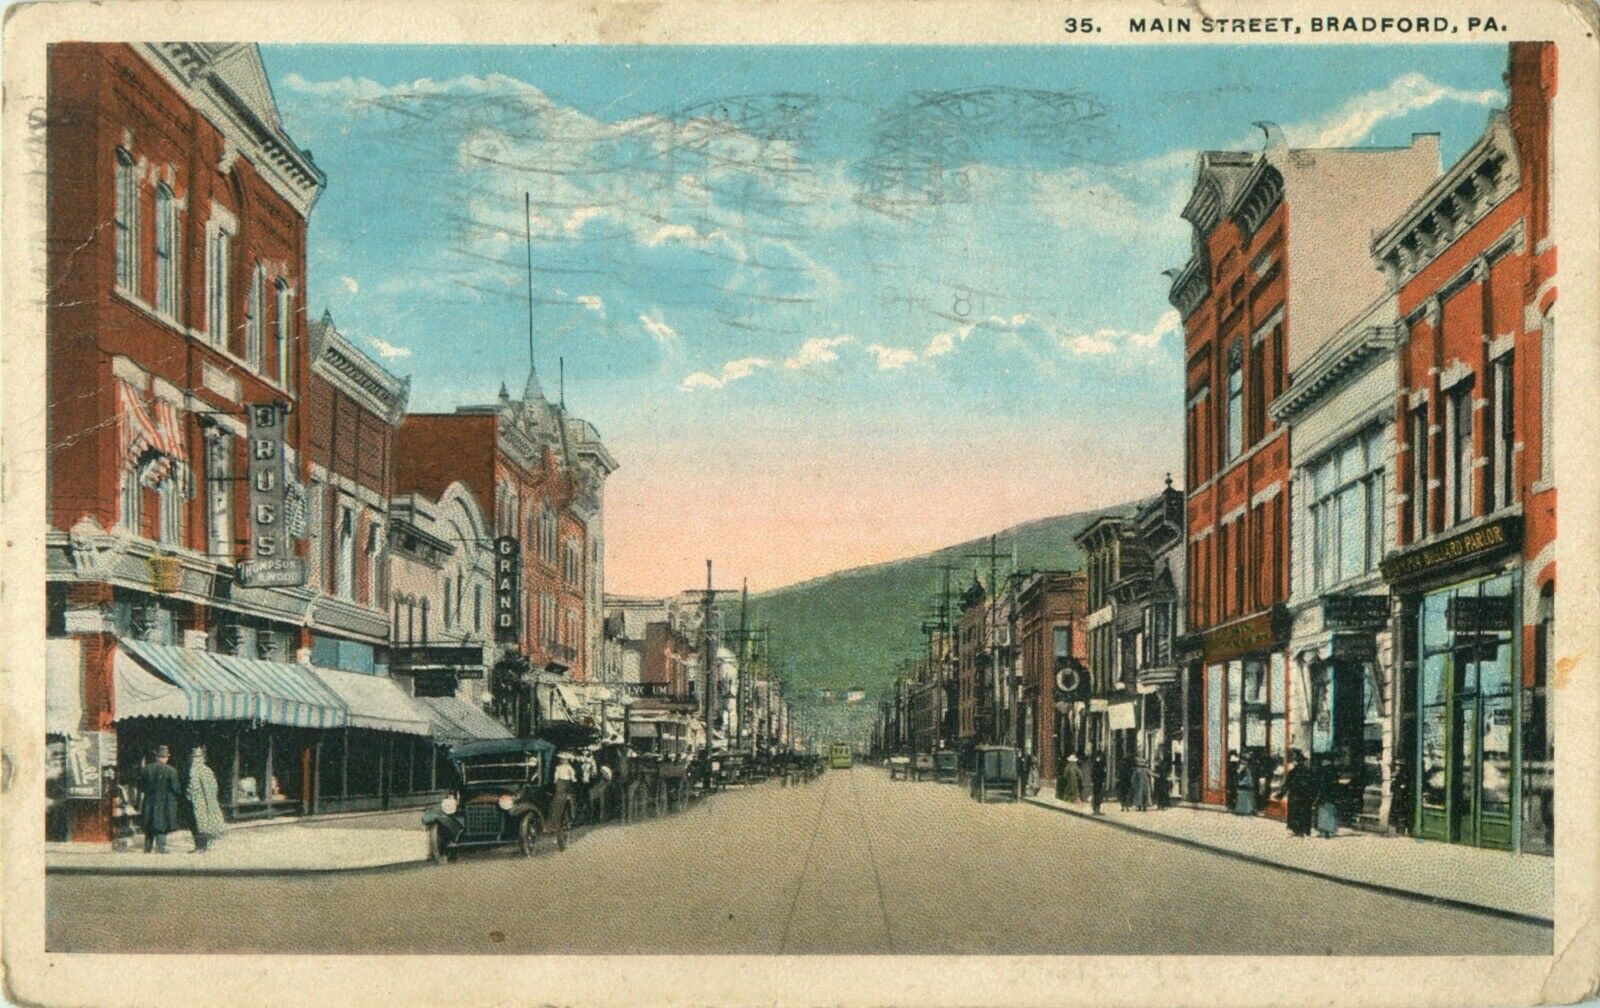 1920S Main Street, Bradford, Pennsylvania - Vintage Postcard